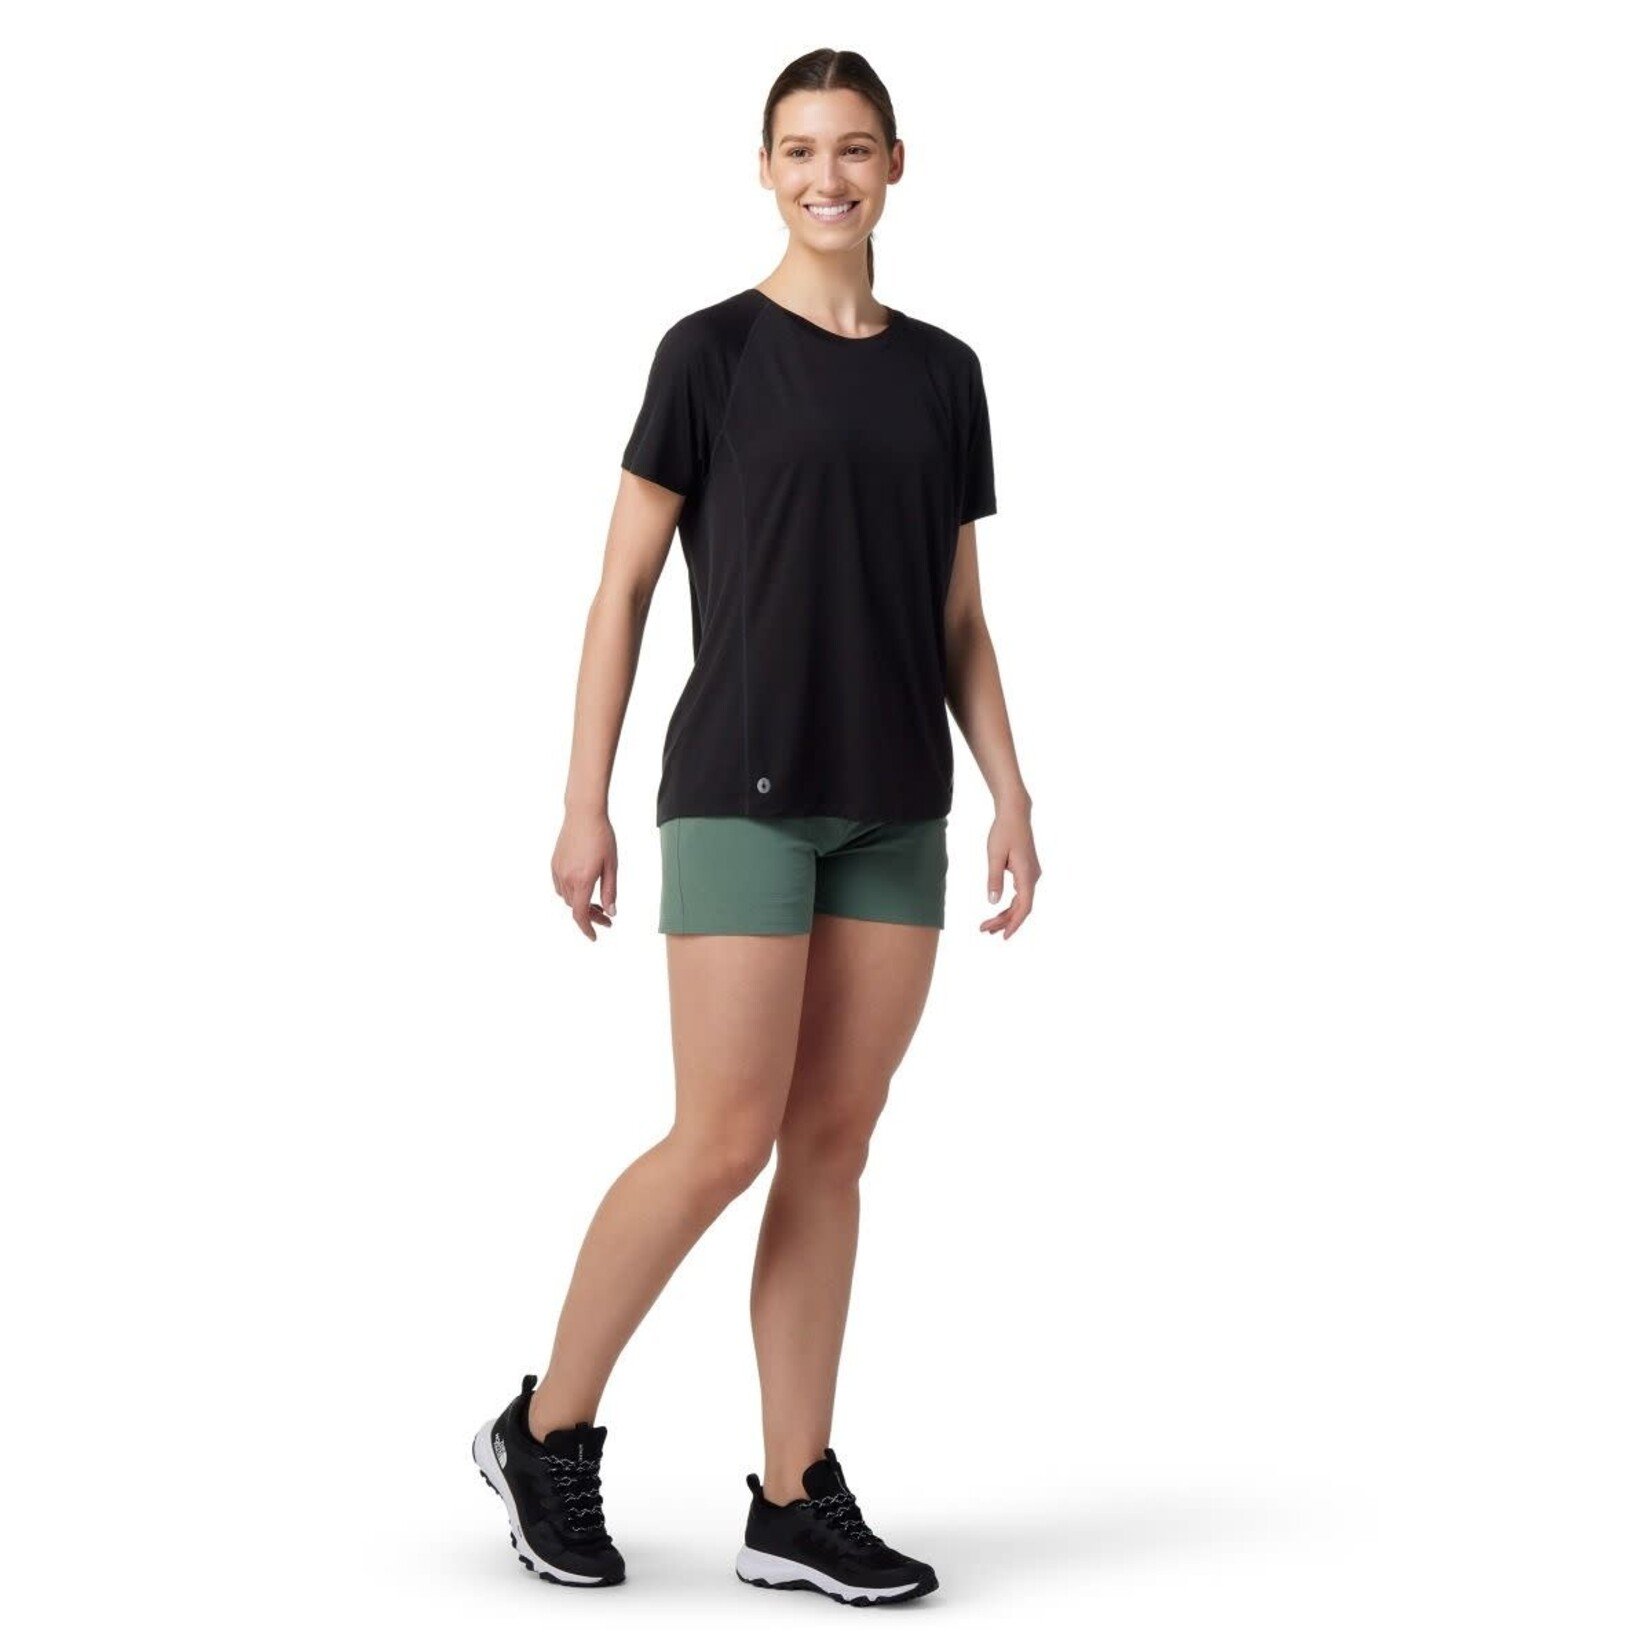 Smartwool Women's Active Ultralite Short Sleeve (T-shirt de sport Ultralite femme)